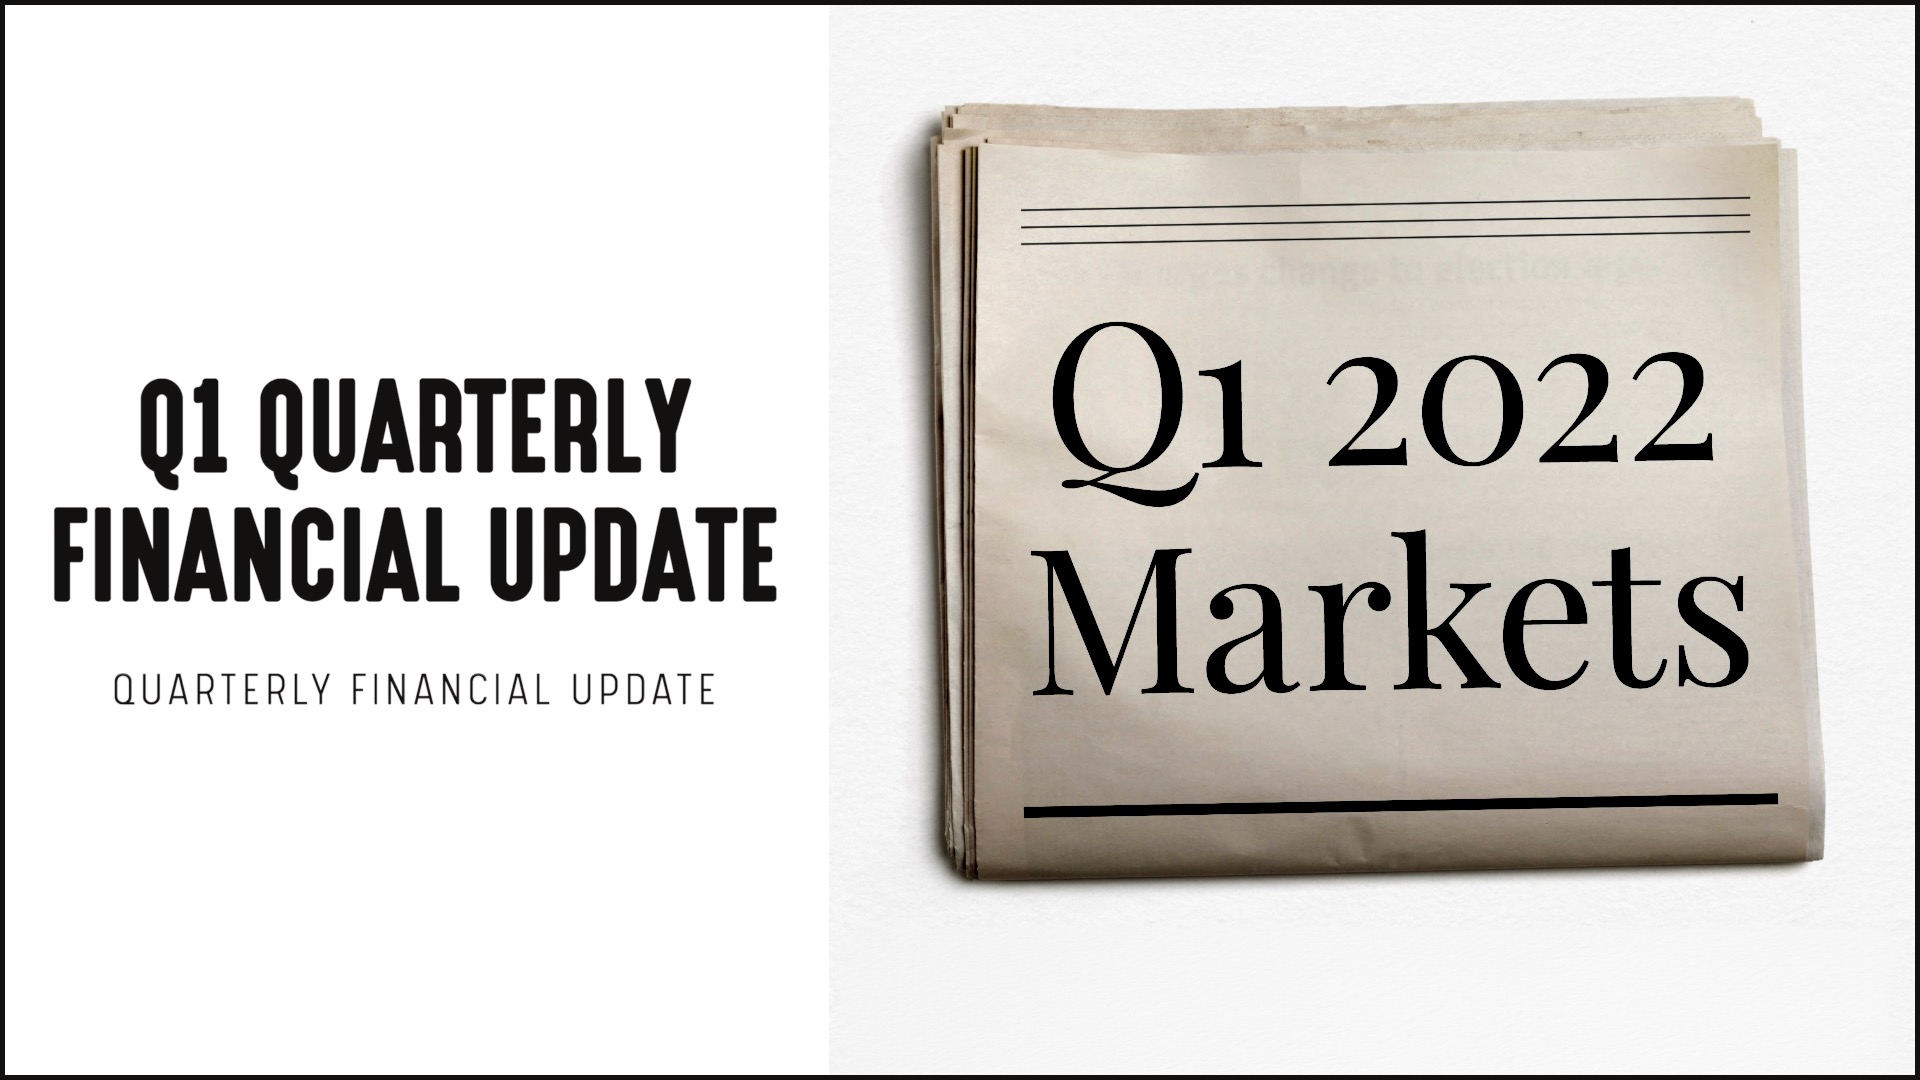 [NEW] Q1 2022 Quarterly Financial Update